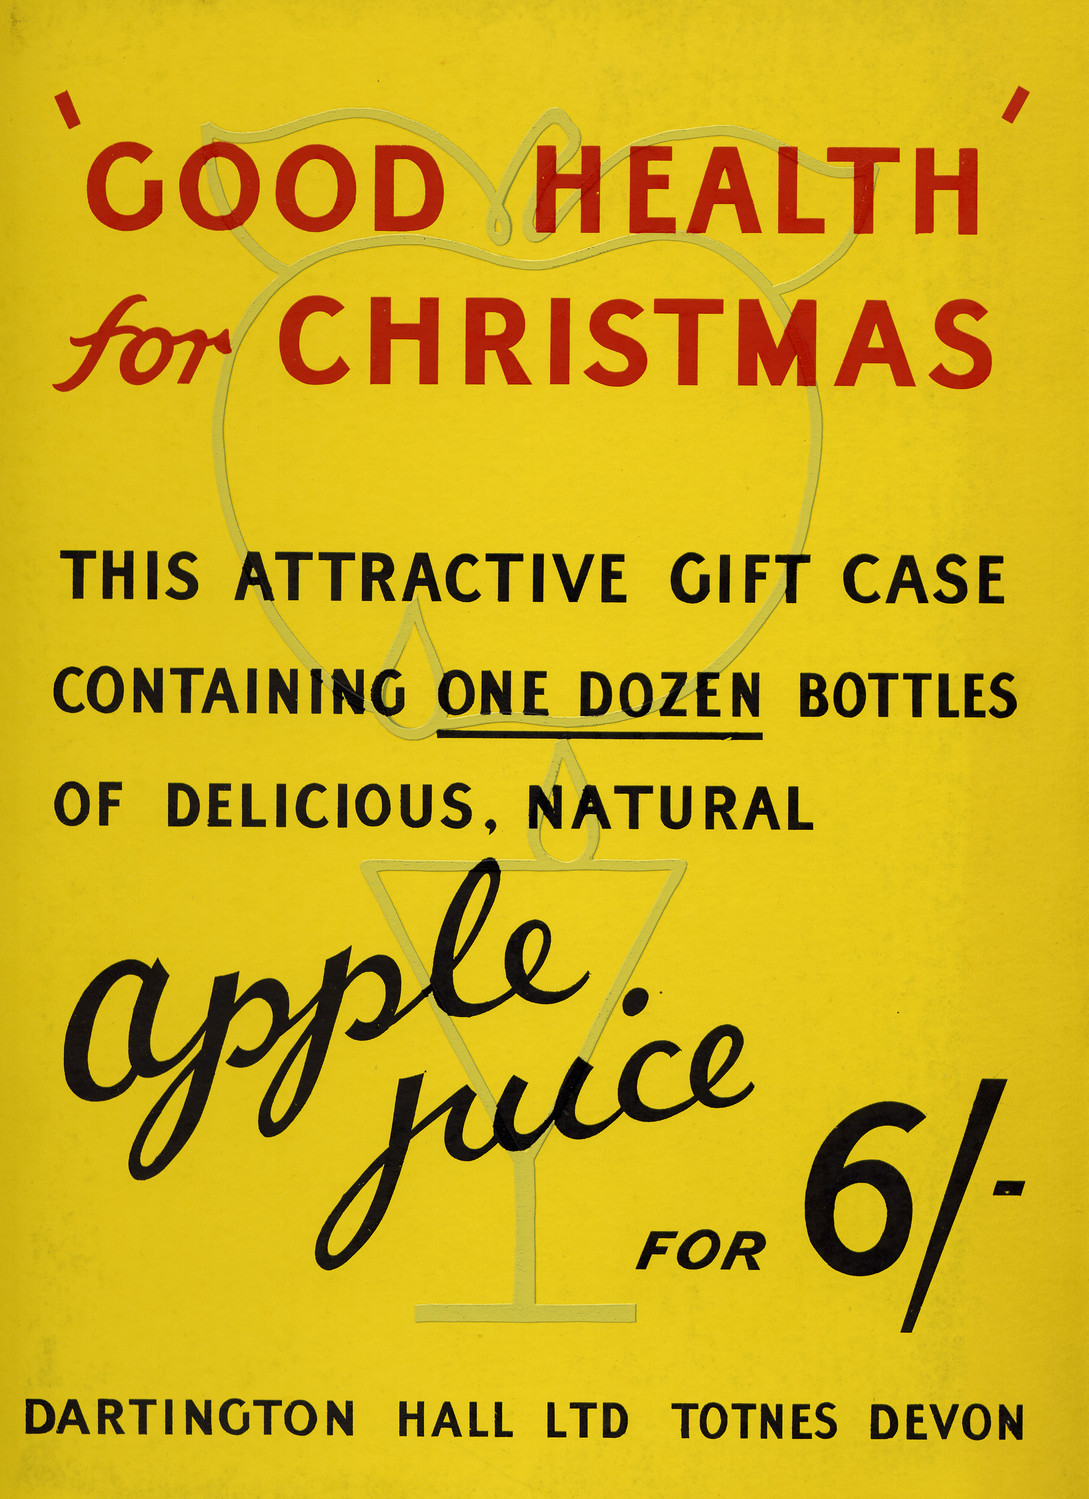 Apple juice advert - Good health for Christmas at Dartington